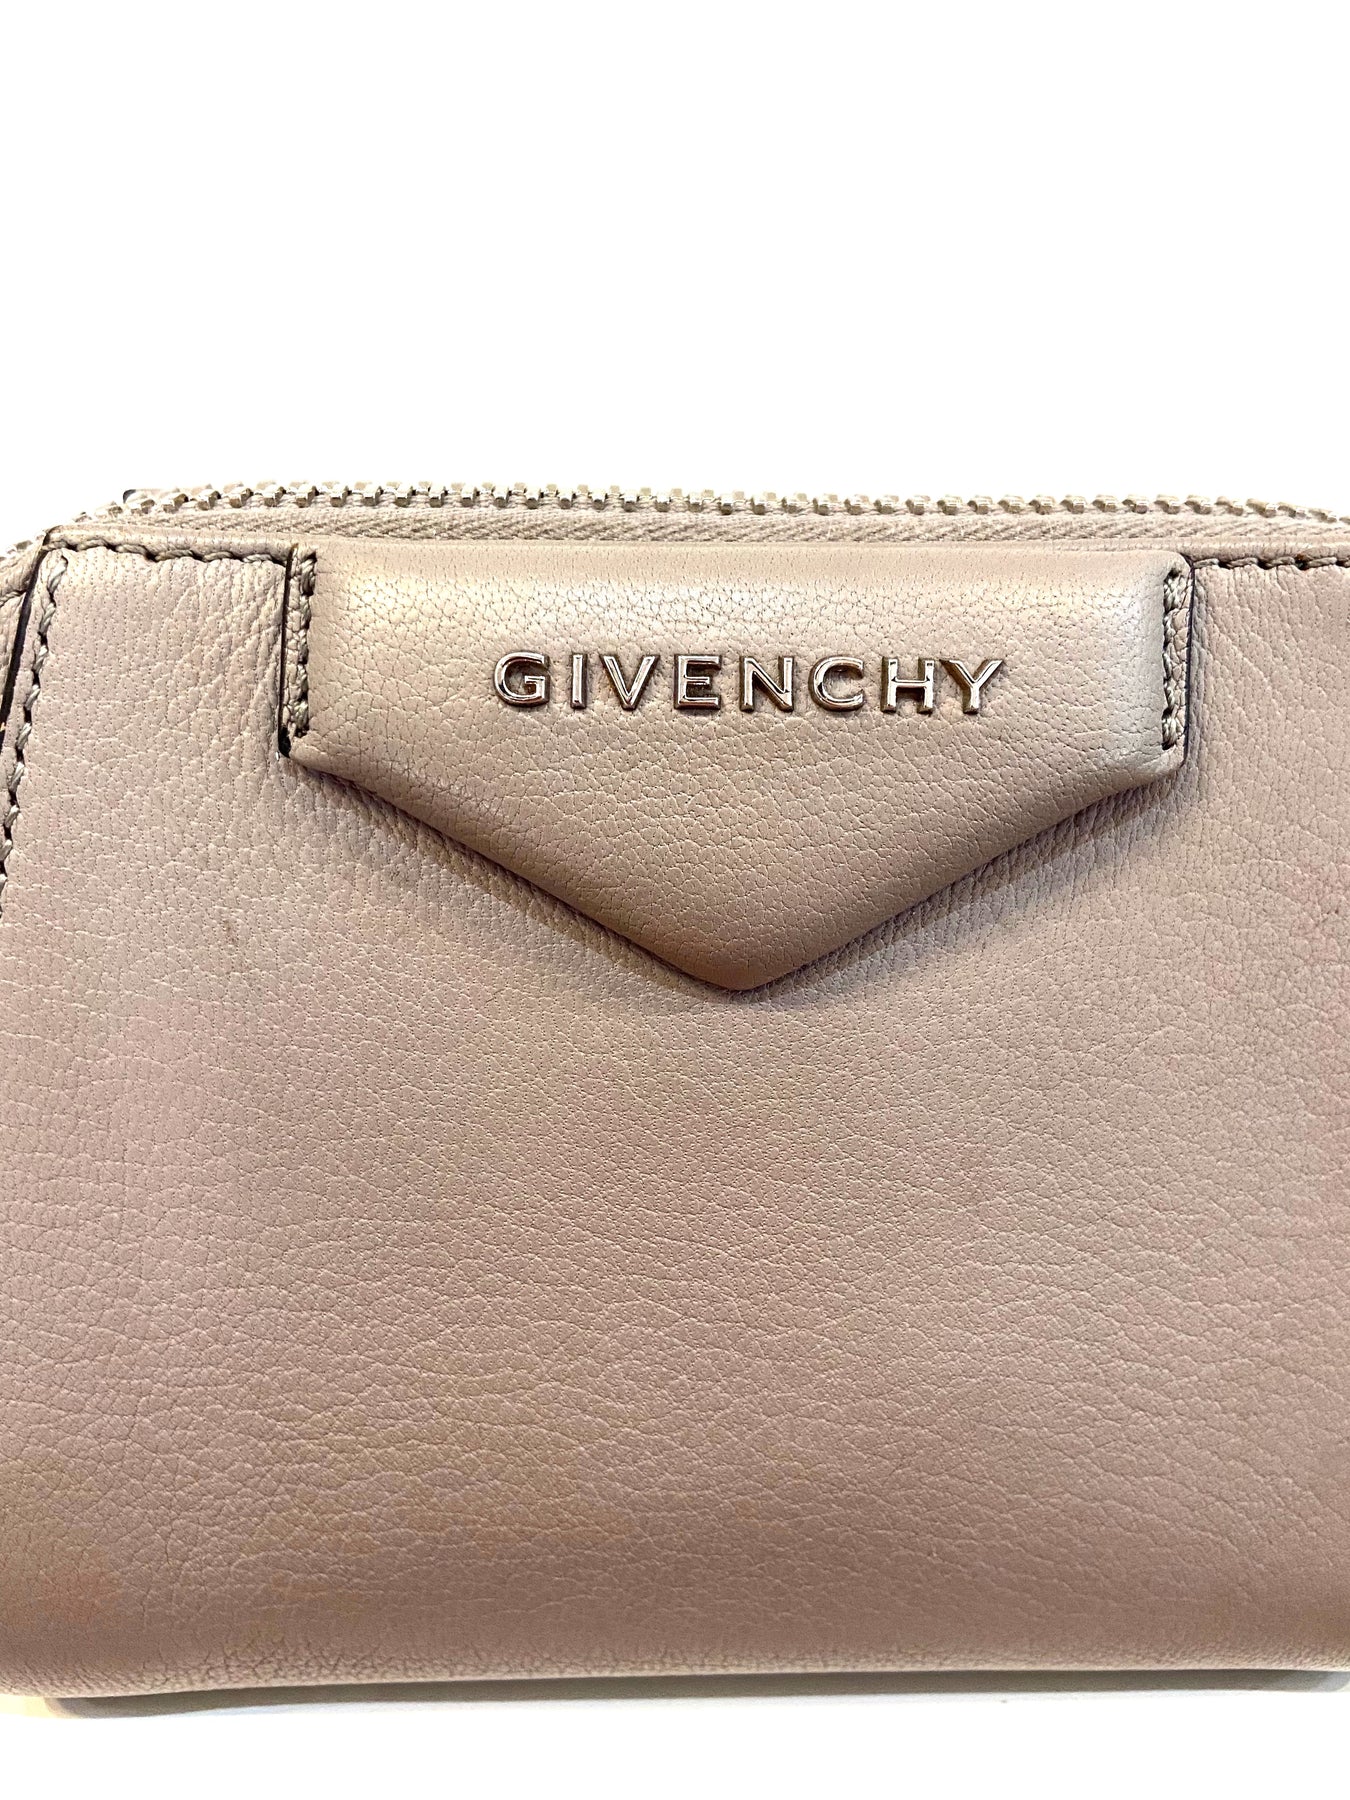 Givenchy Nano Antigona Sugar Leather Crossbody bag. NWT!